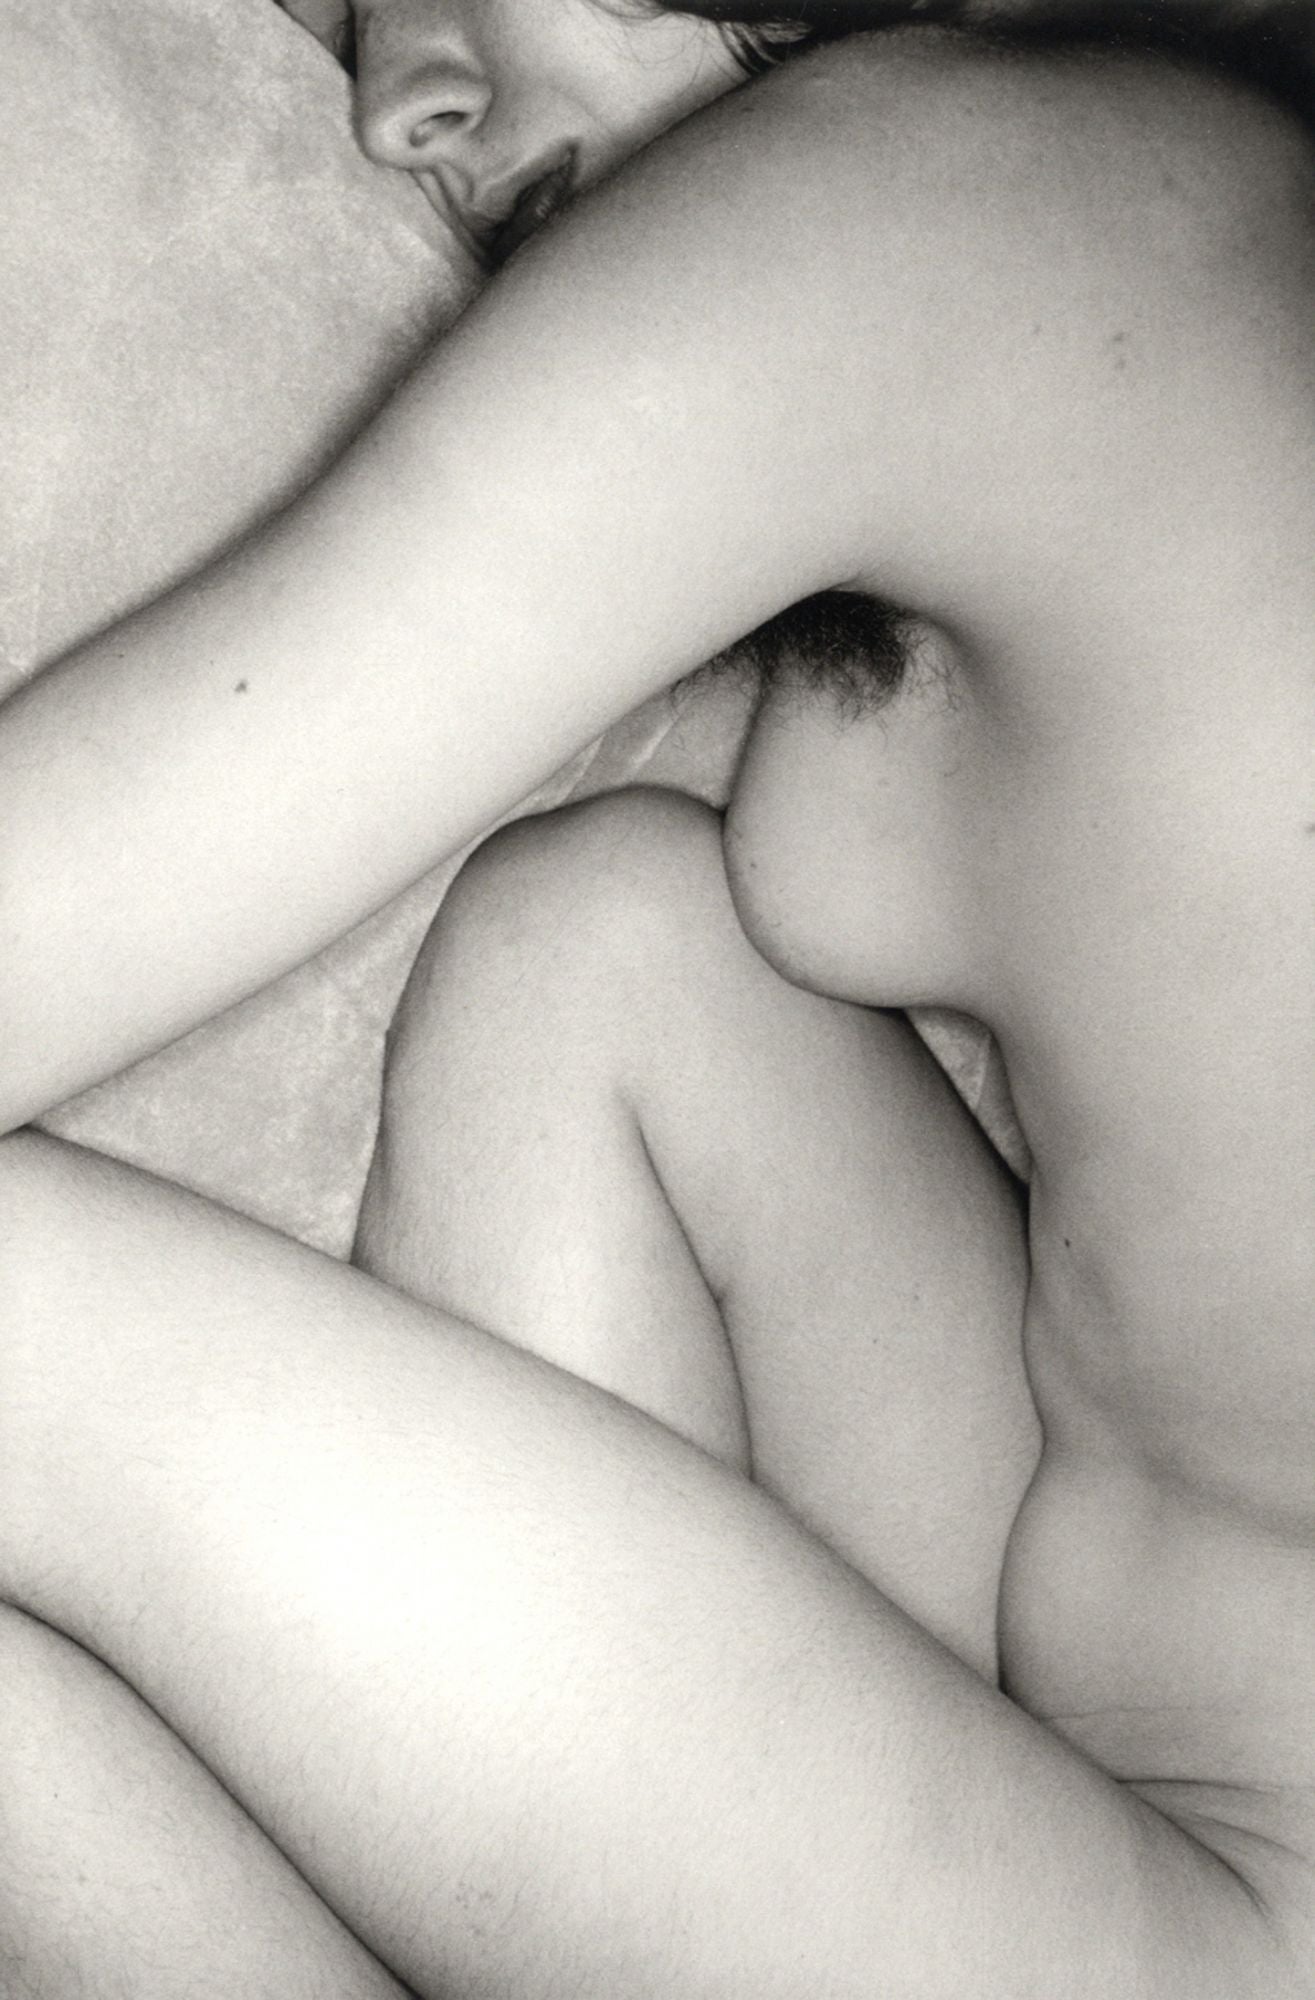 Lee Friedlander: The Nudes: A Second Look [SIGNED]